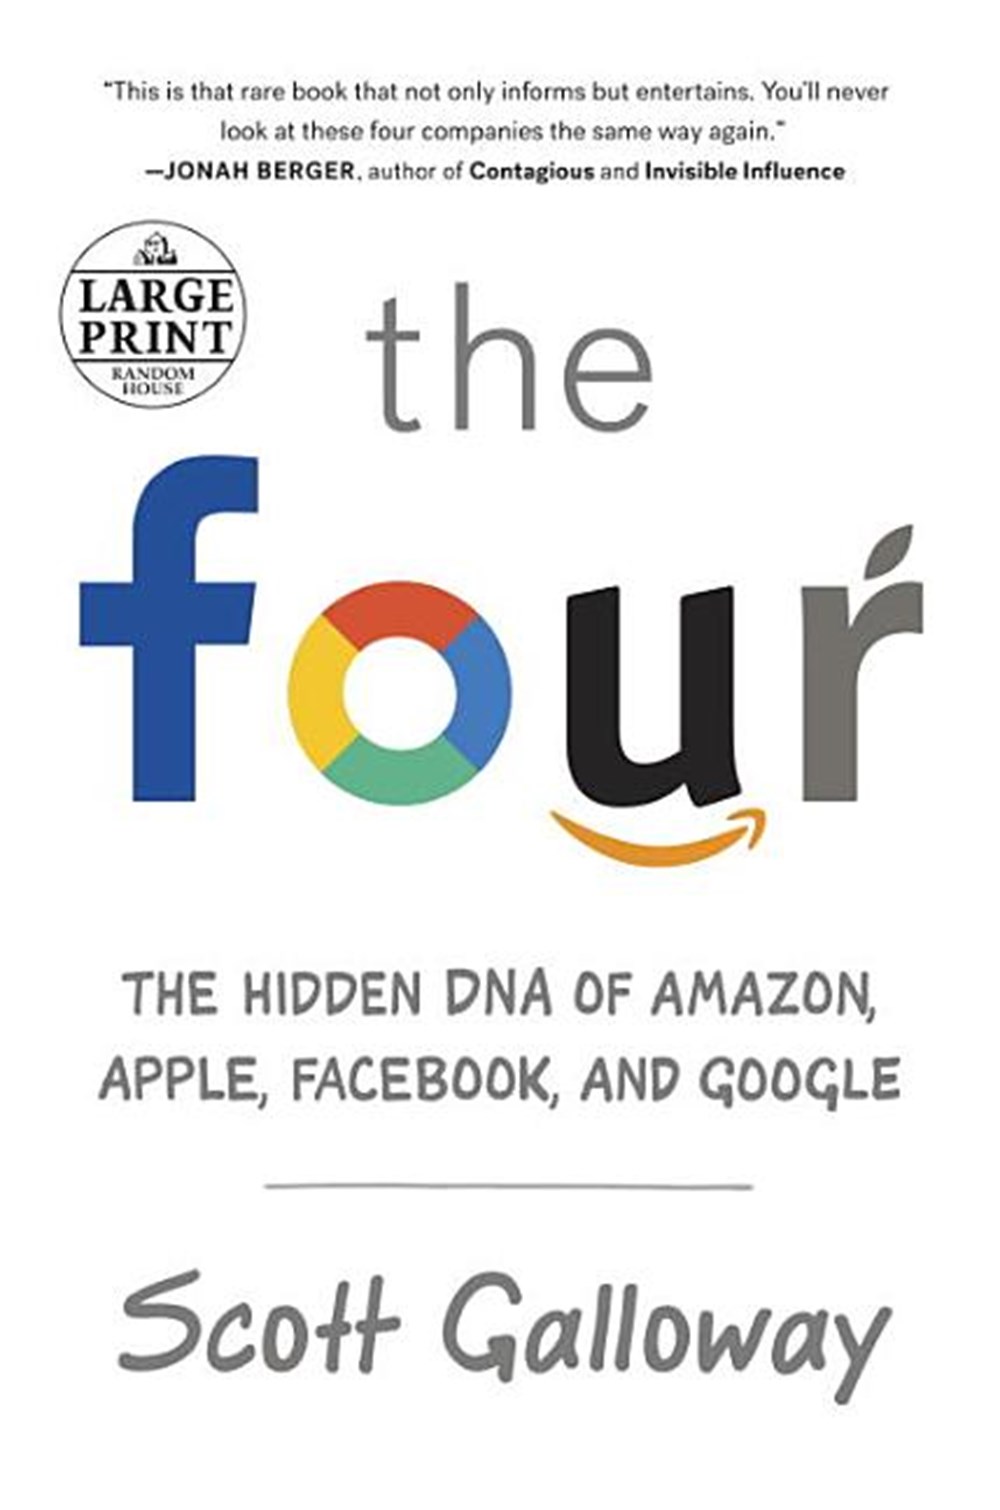 Four The Hidden DNA of Amazon, Apple, Facebook, and Google